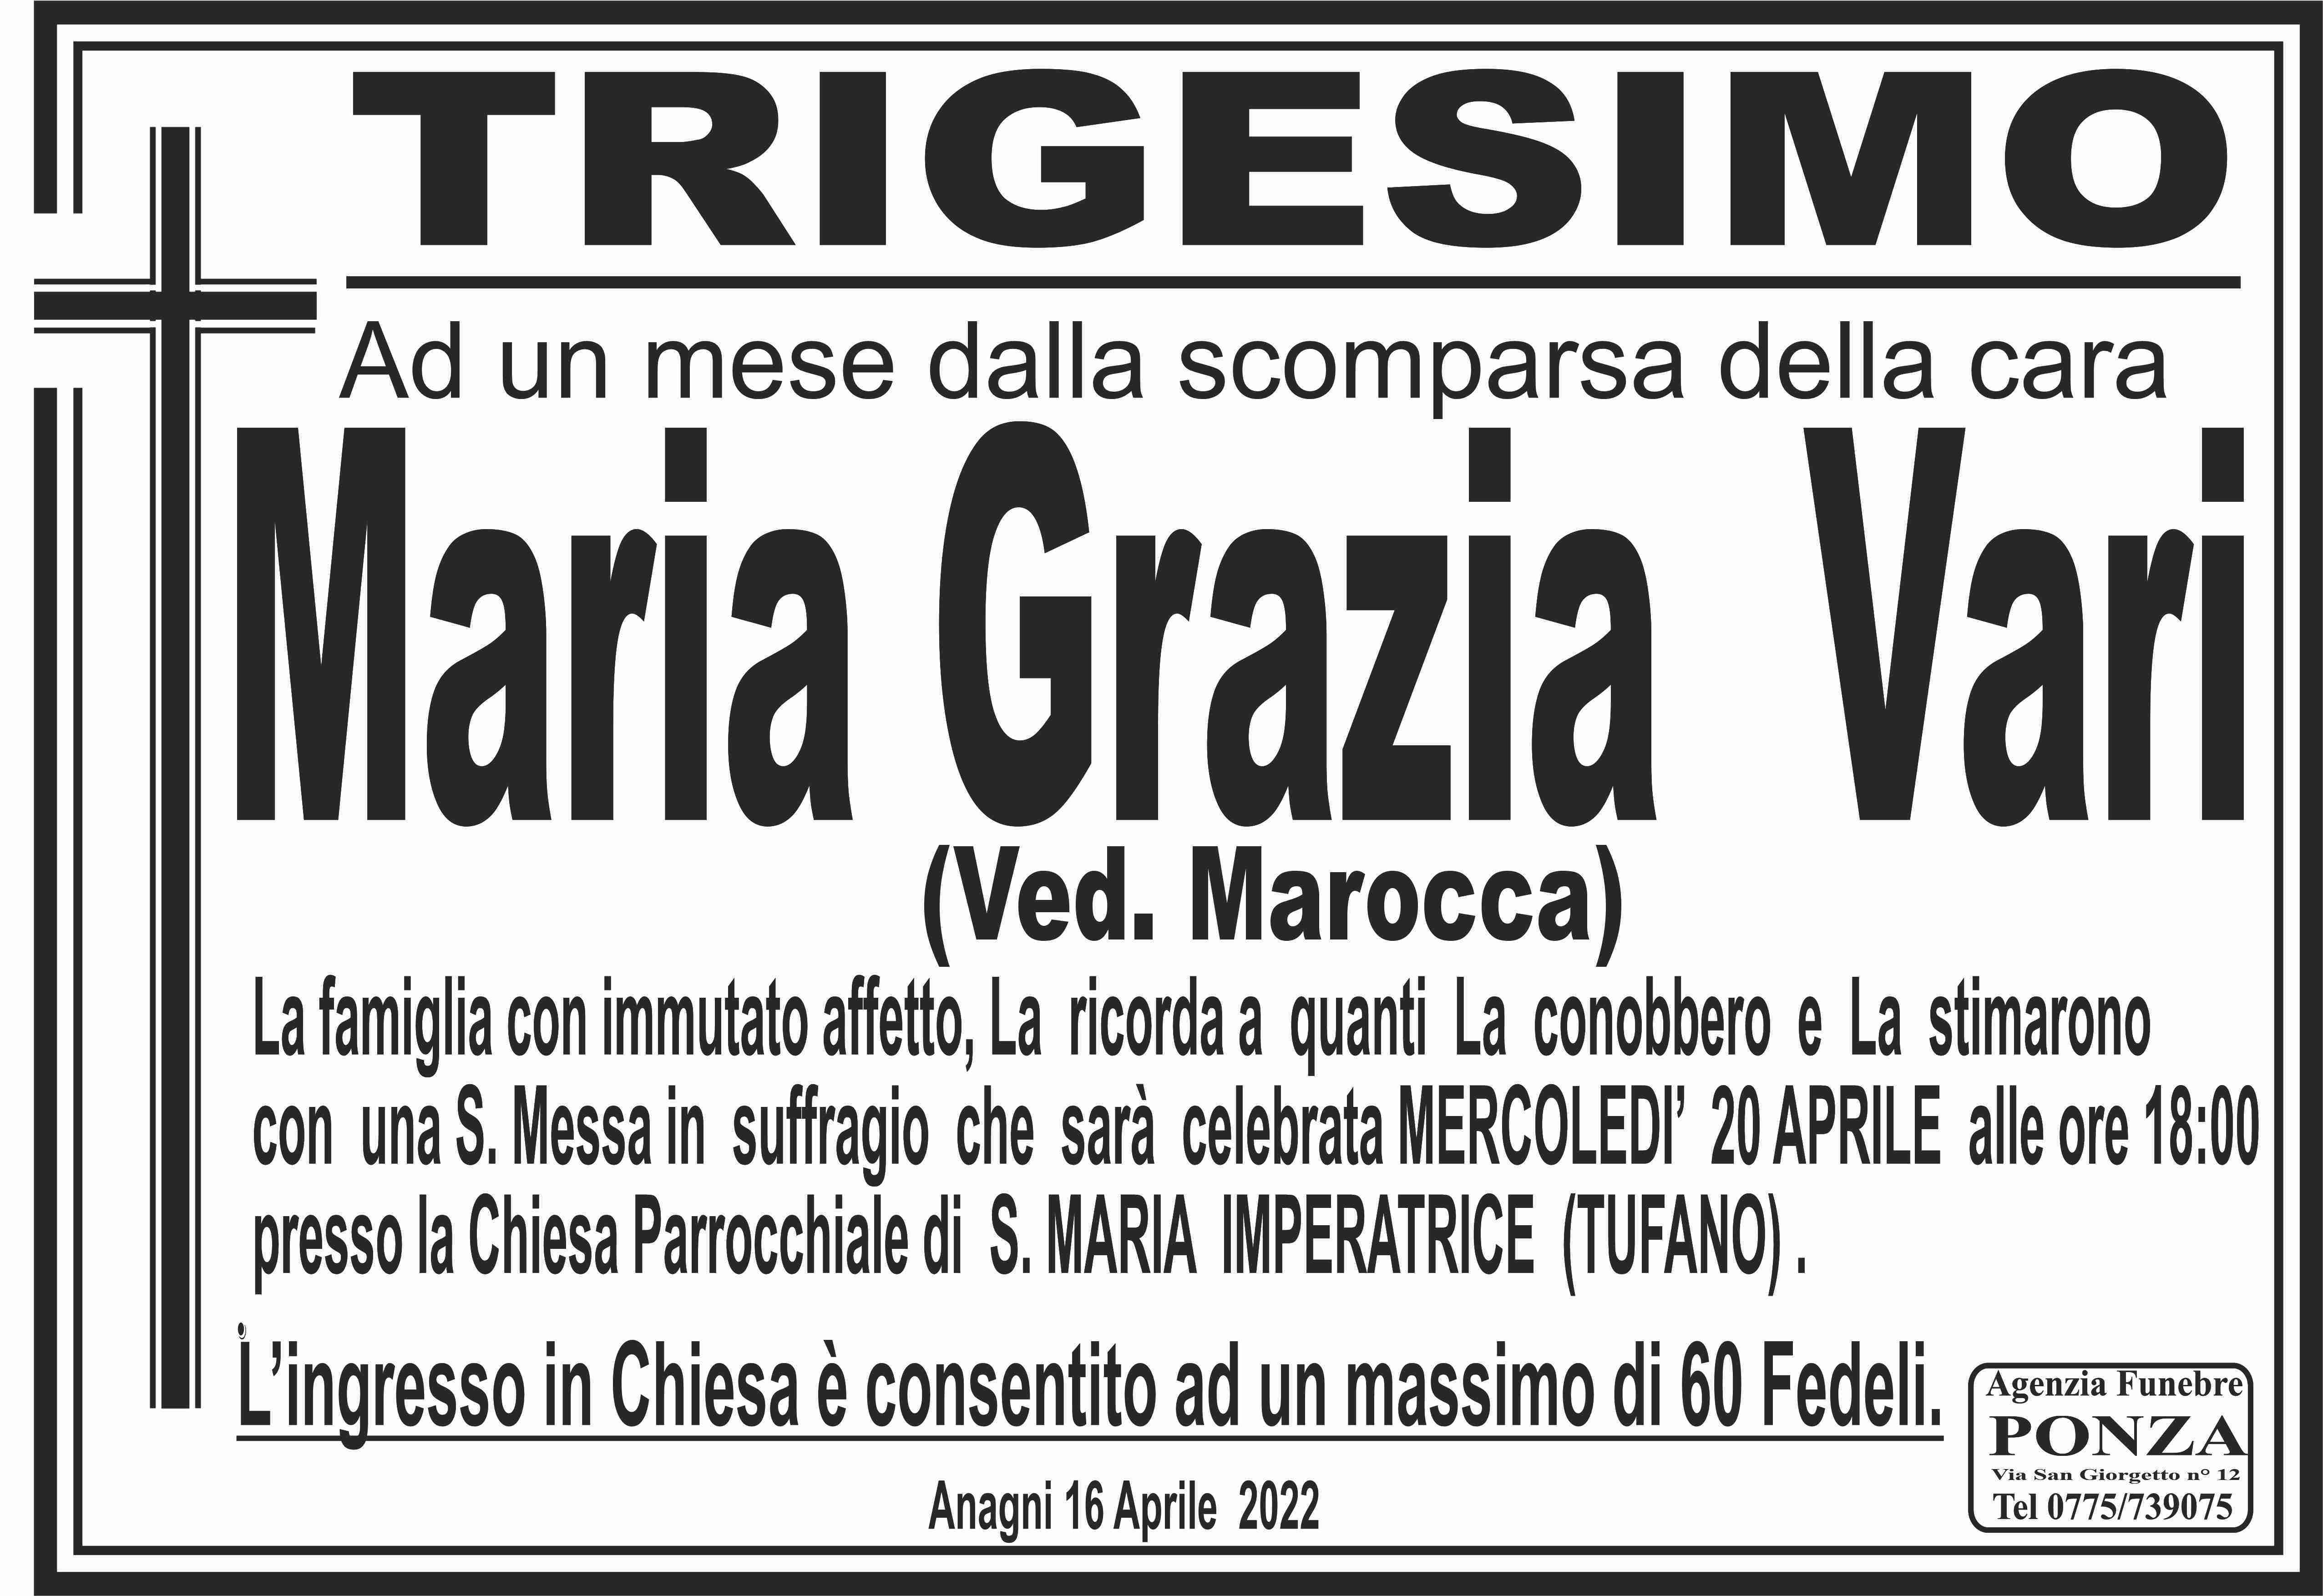 Maria Grazia Vari